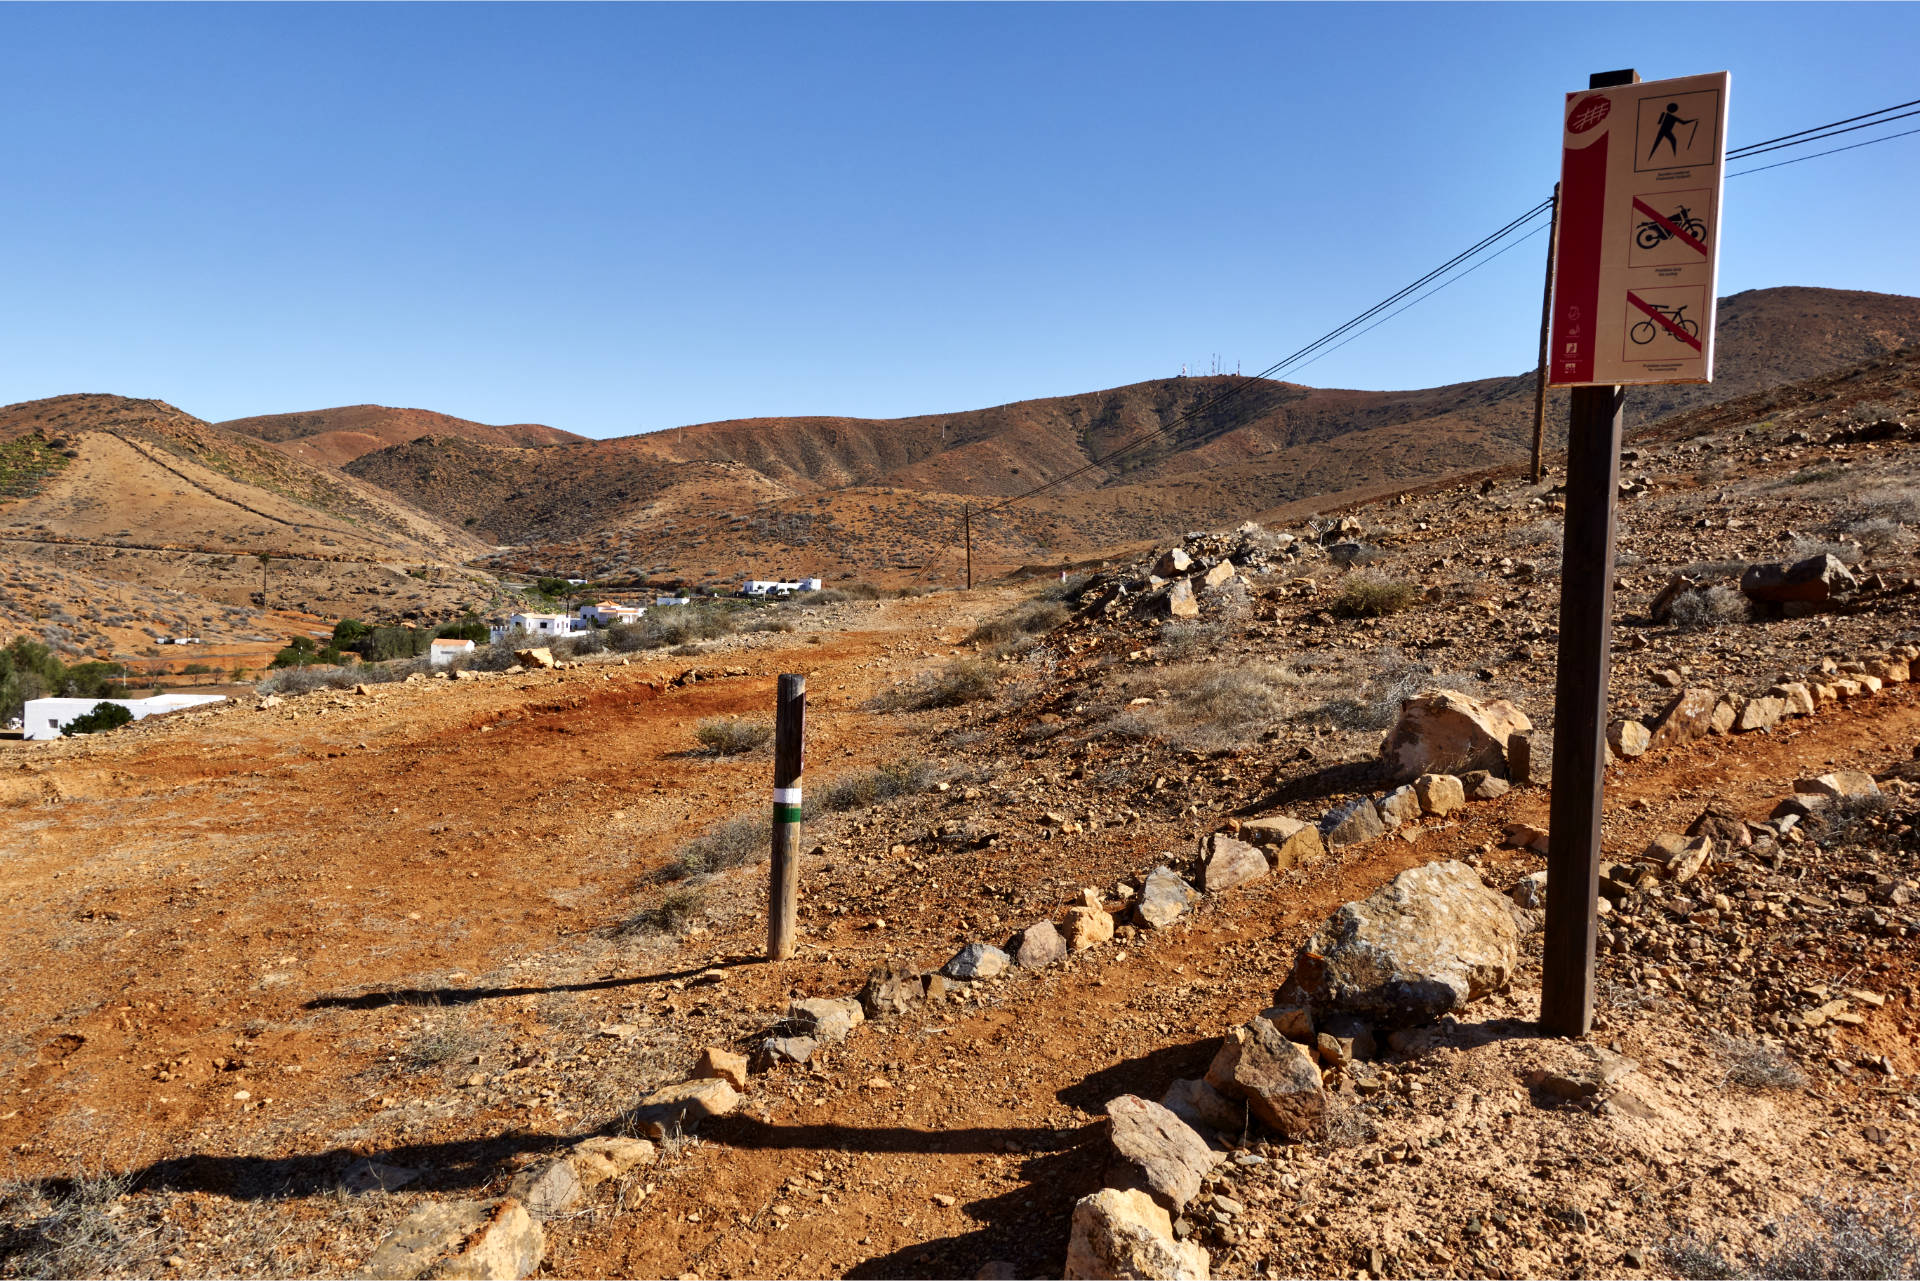 Auf de Camino Naturales de Fuerteventura sind Mountainbikes verboten.